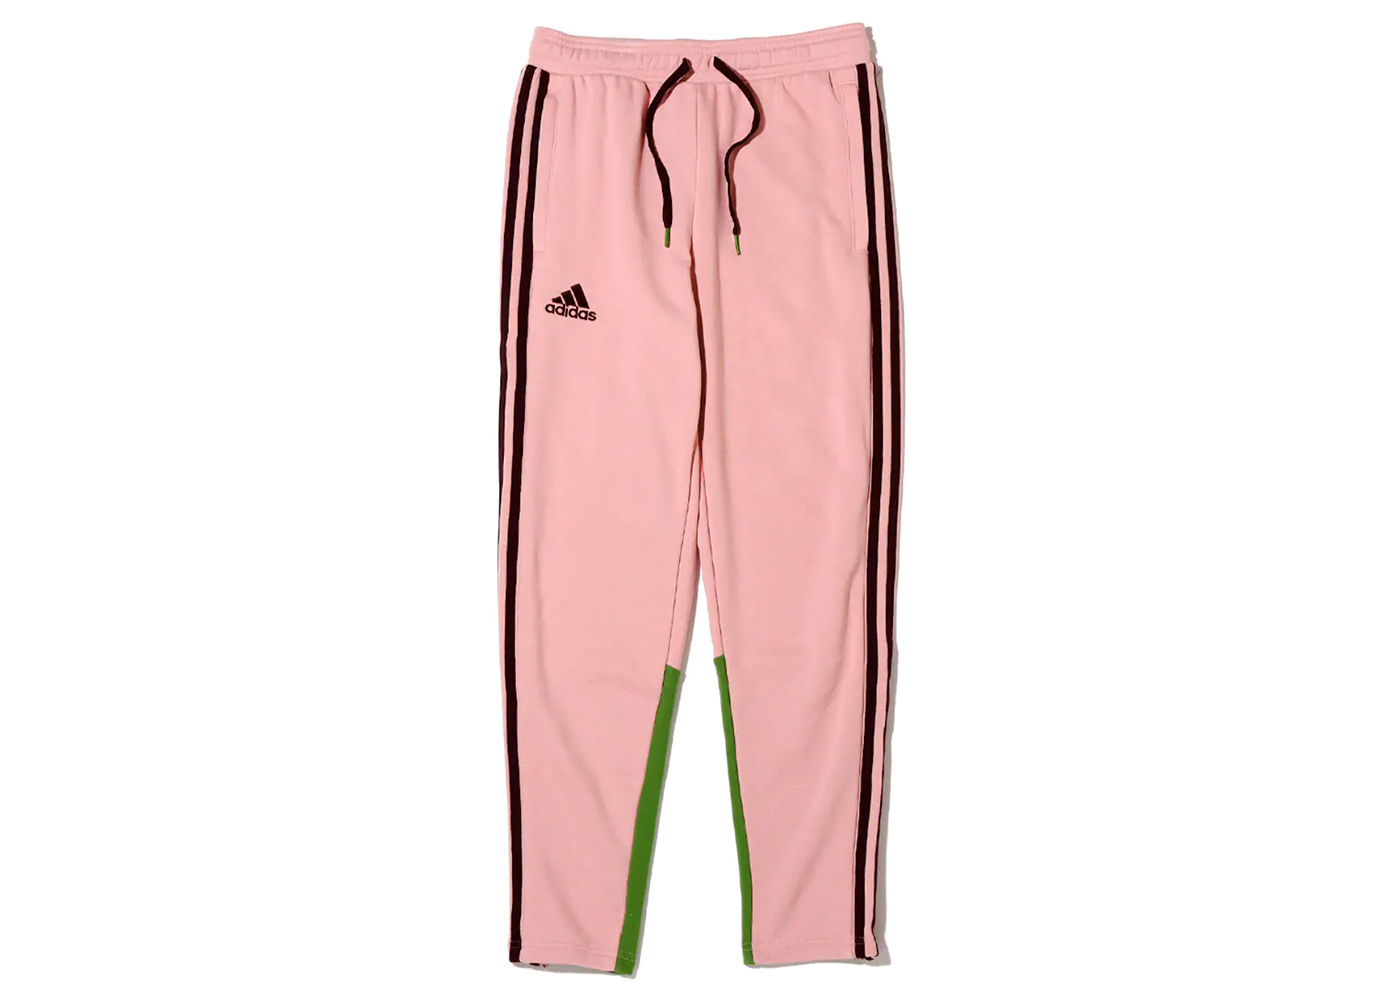 Arvind Sport  adidas Sportswear Shoes  Clothes in Unique Offers   trendsetter adidas pink pants black suit men